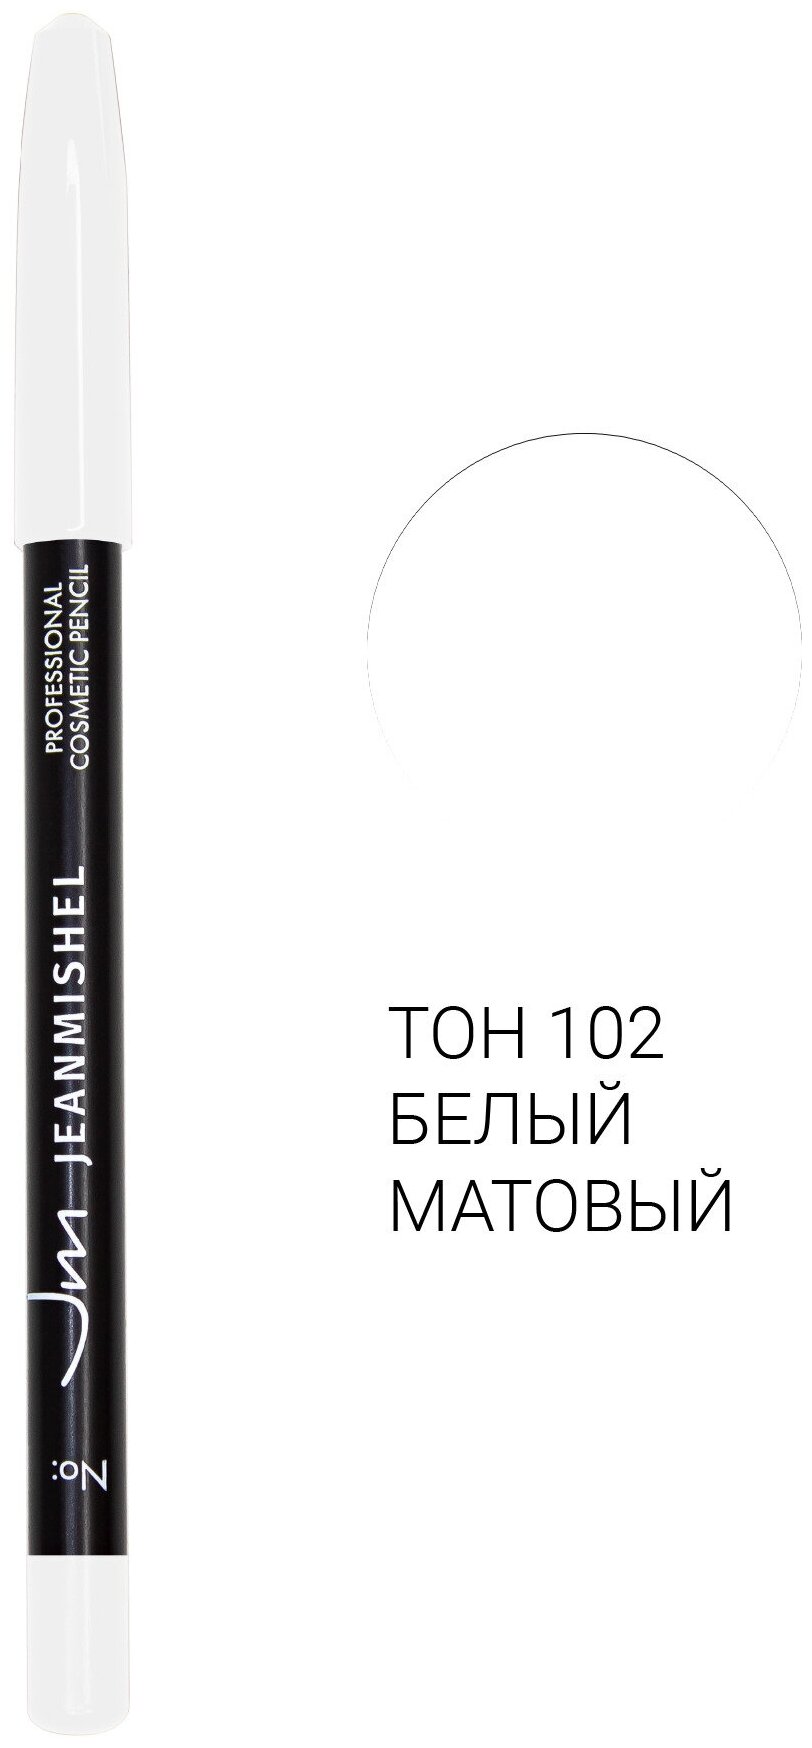 Jeanmishel Косметический карандаш с цветным колпачком Professional COSMETIC PENCIL, тон 102